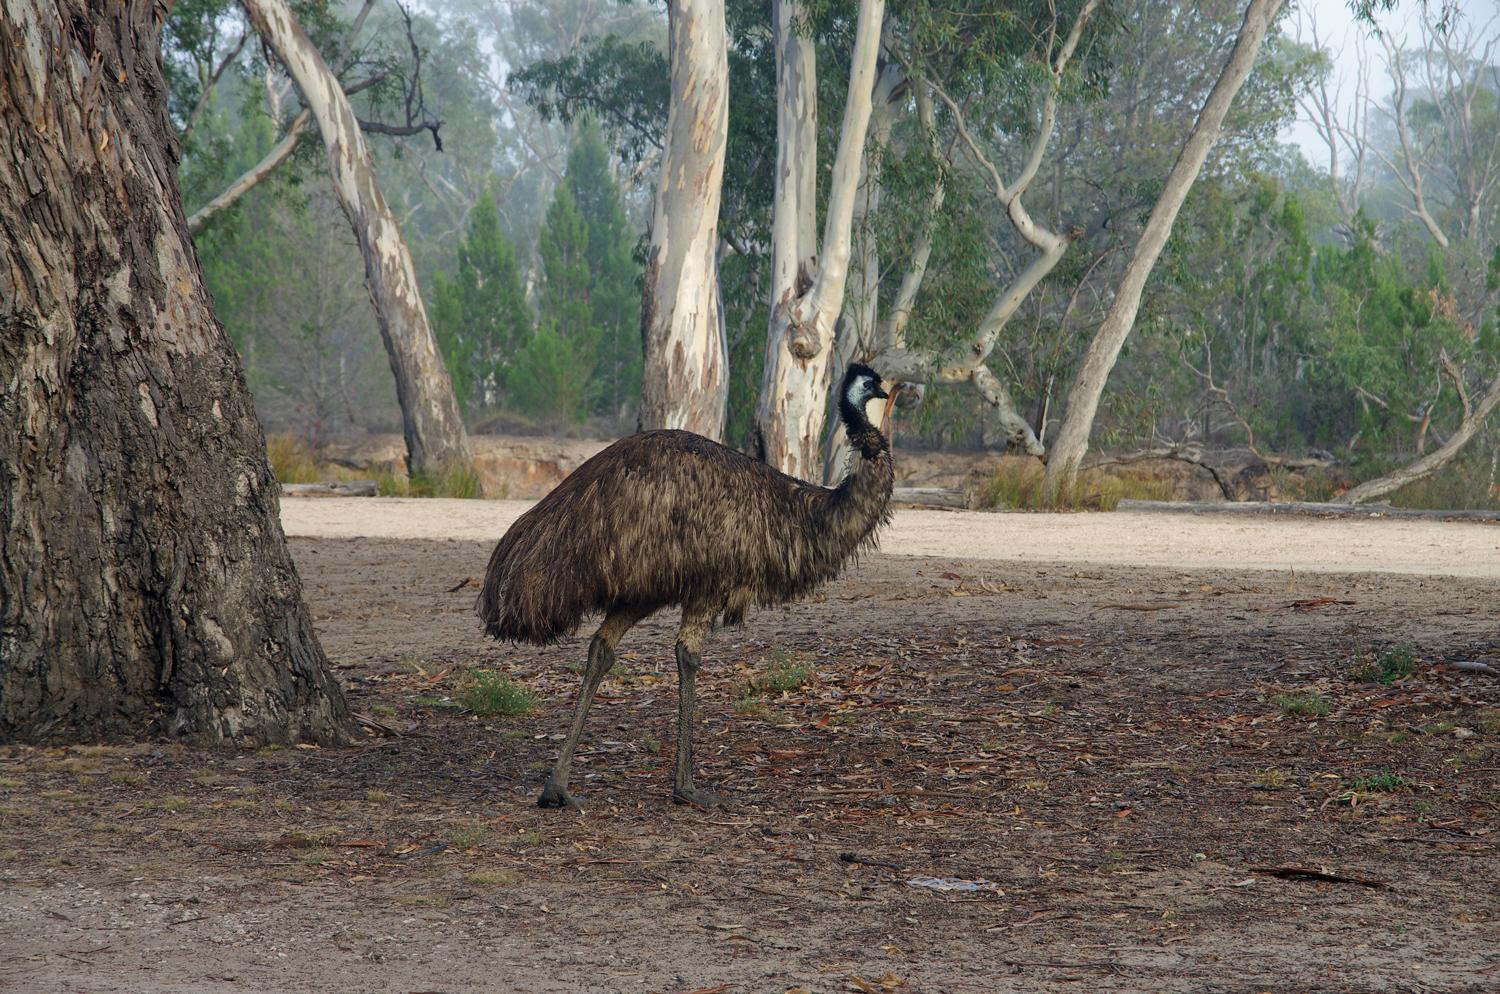 Emu Photo by Richard Lund